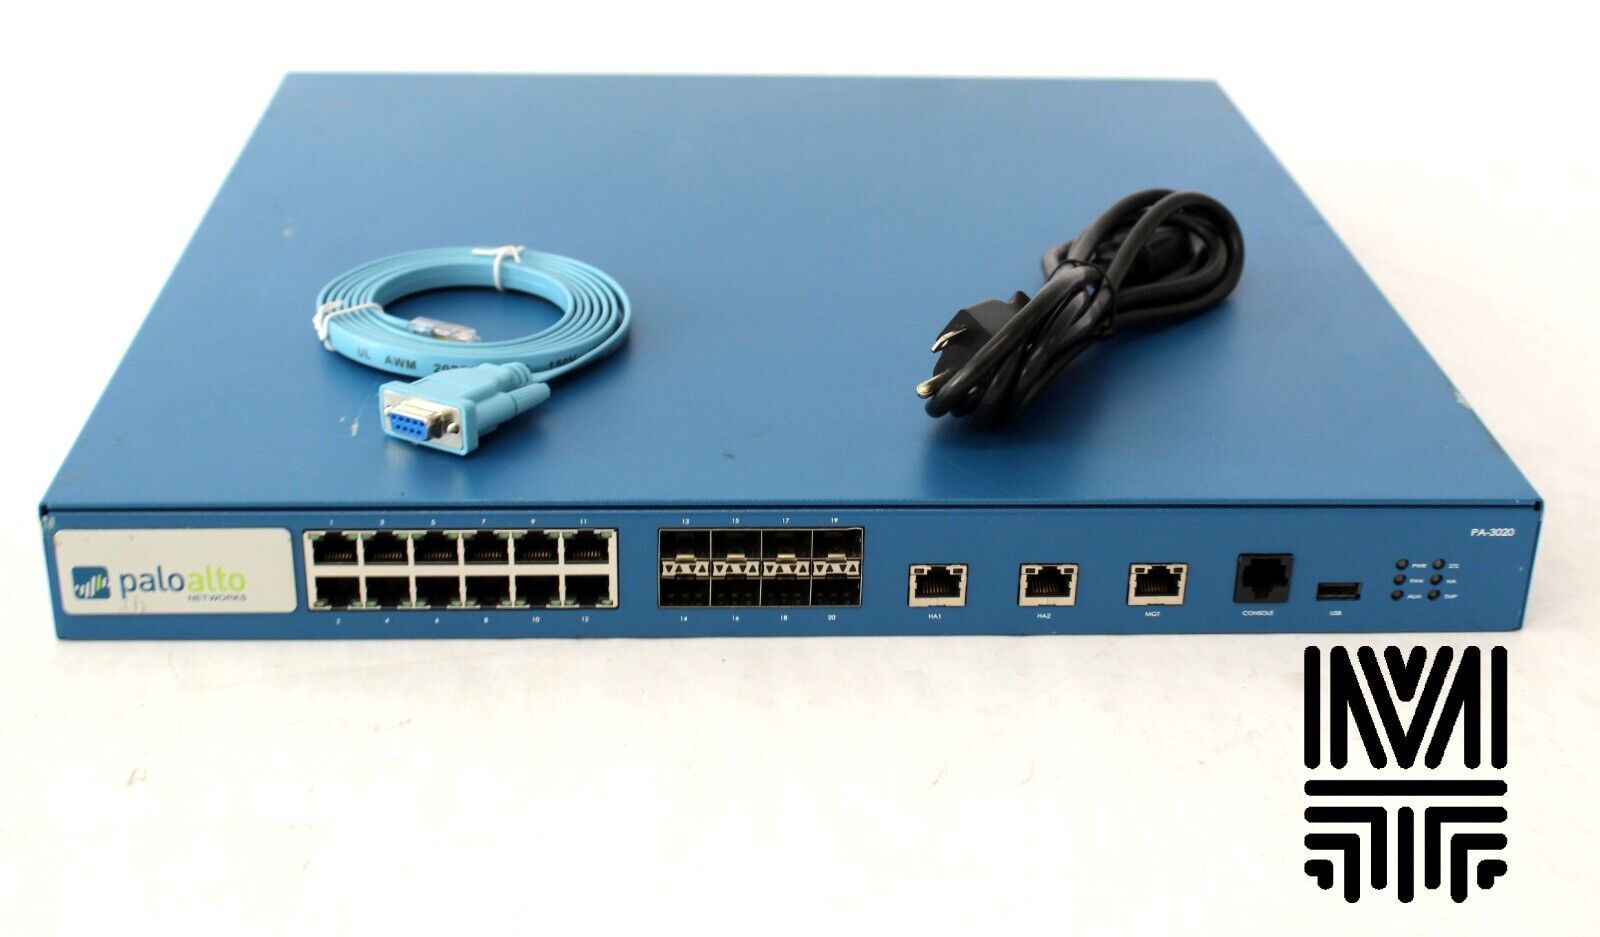 Palo Alto PA-3020 3000 Series Firewall 2Gbps Throughput Security Appliance